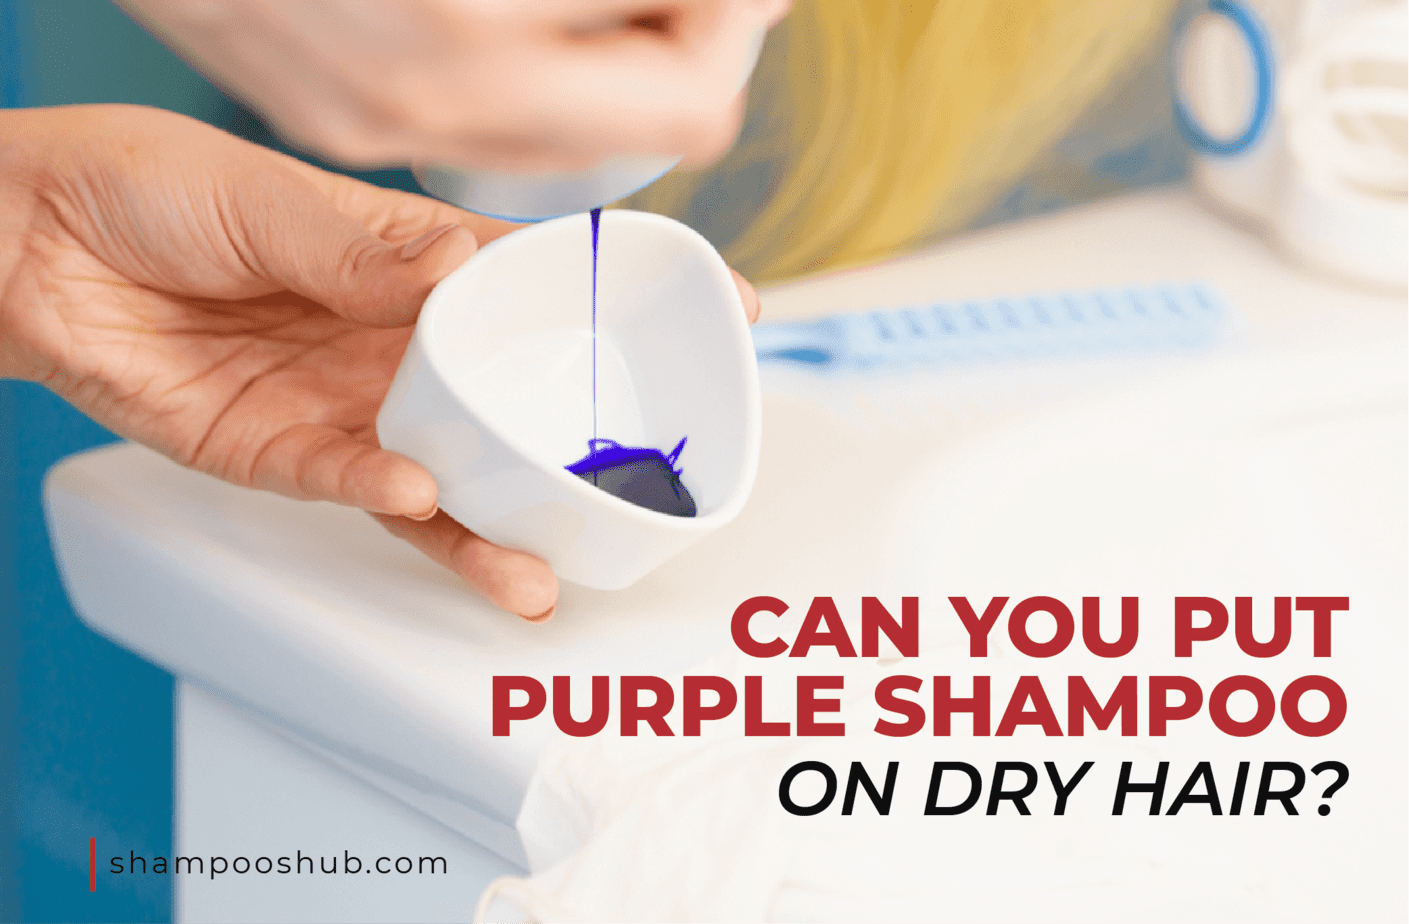 Can You Put Purple Shampoo On Dry Hair?